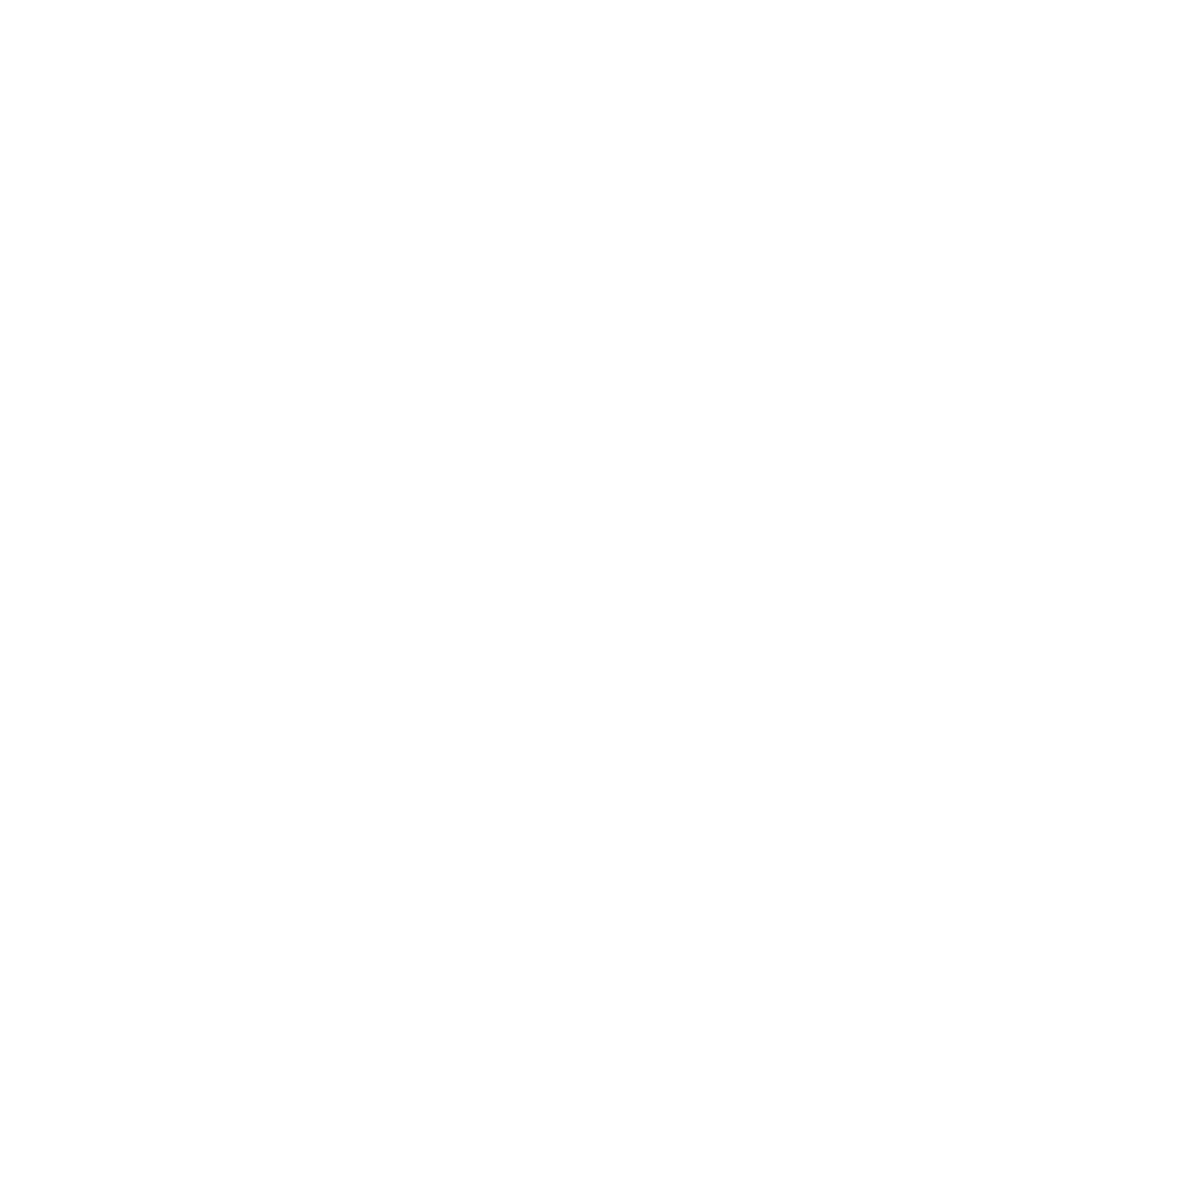 Yas Mena Cycles